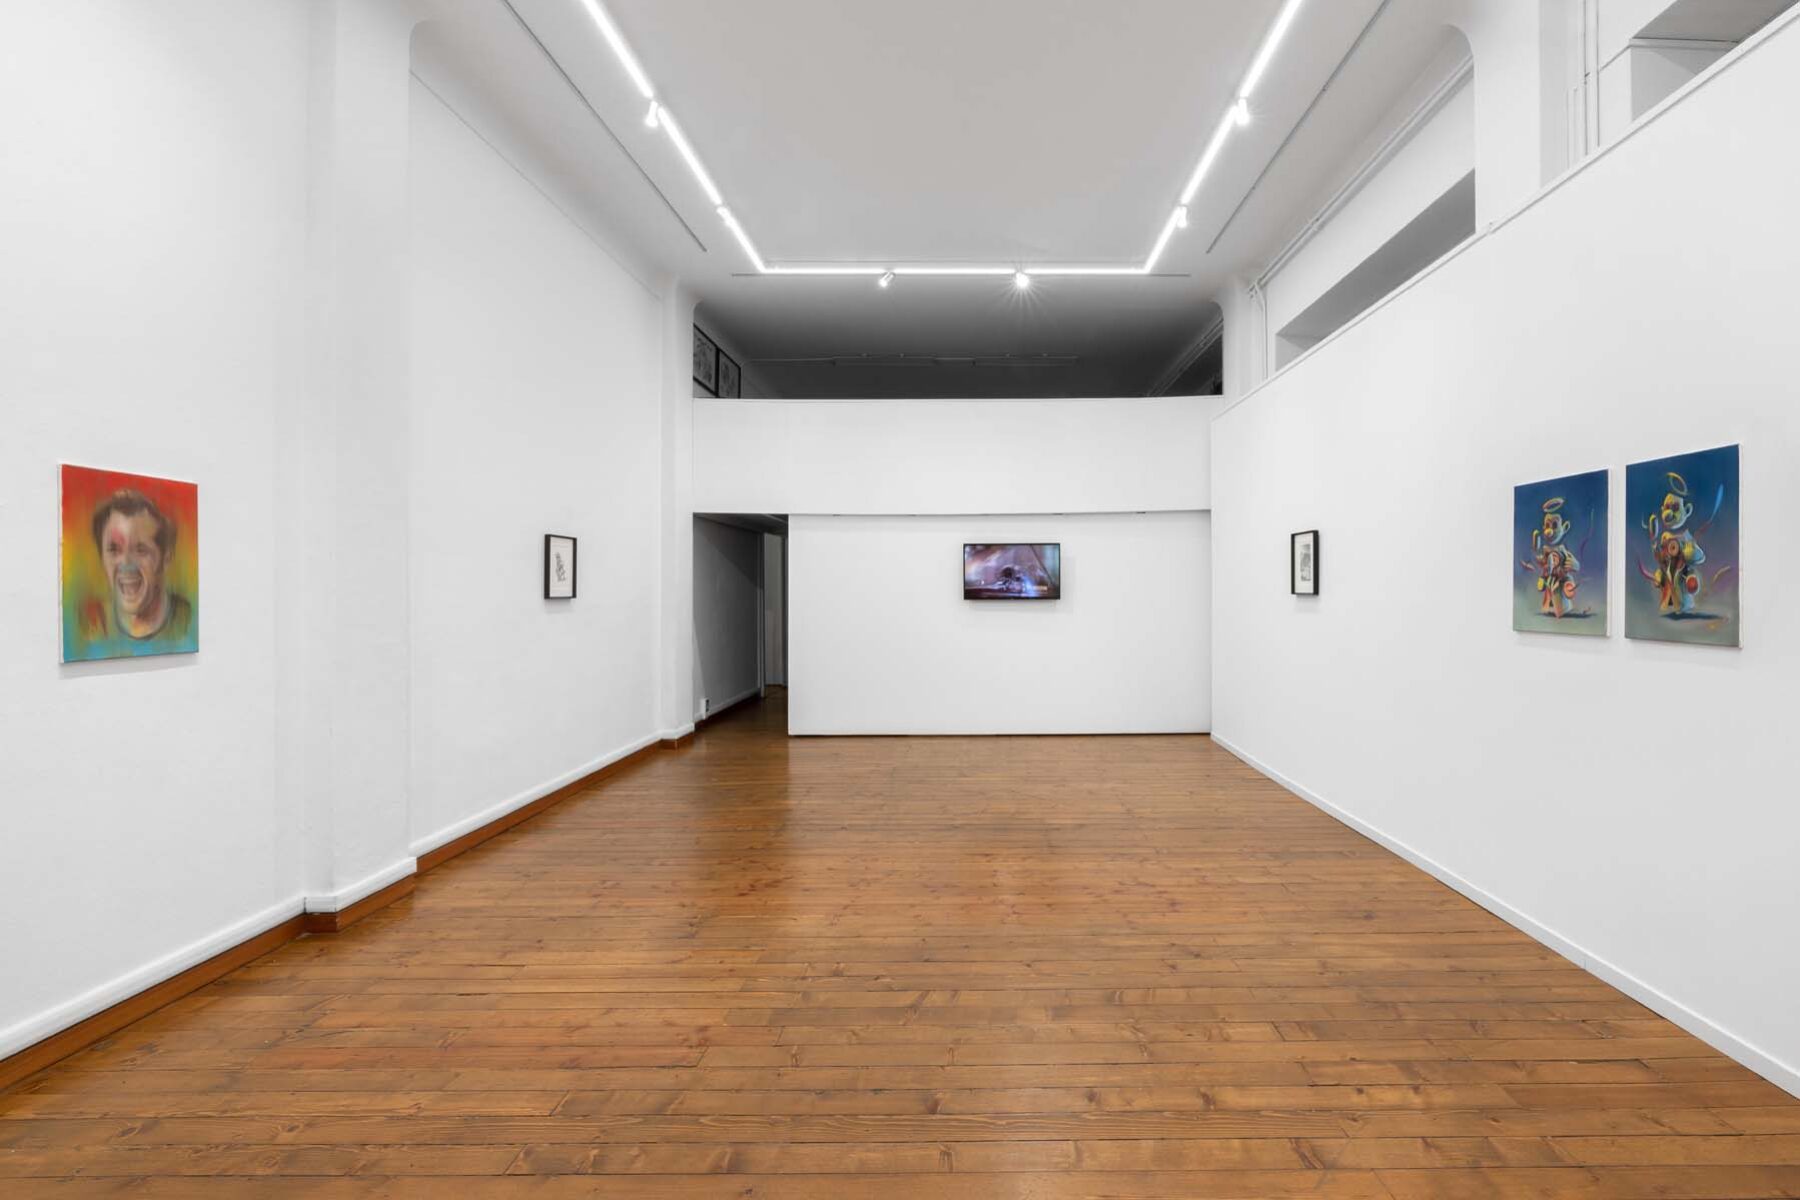 Filip Markiewicz, Road to Nowhere, installation view, C+N Canepaneri, Milano, ph. Mattia Mognetti